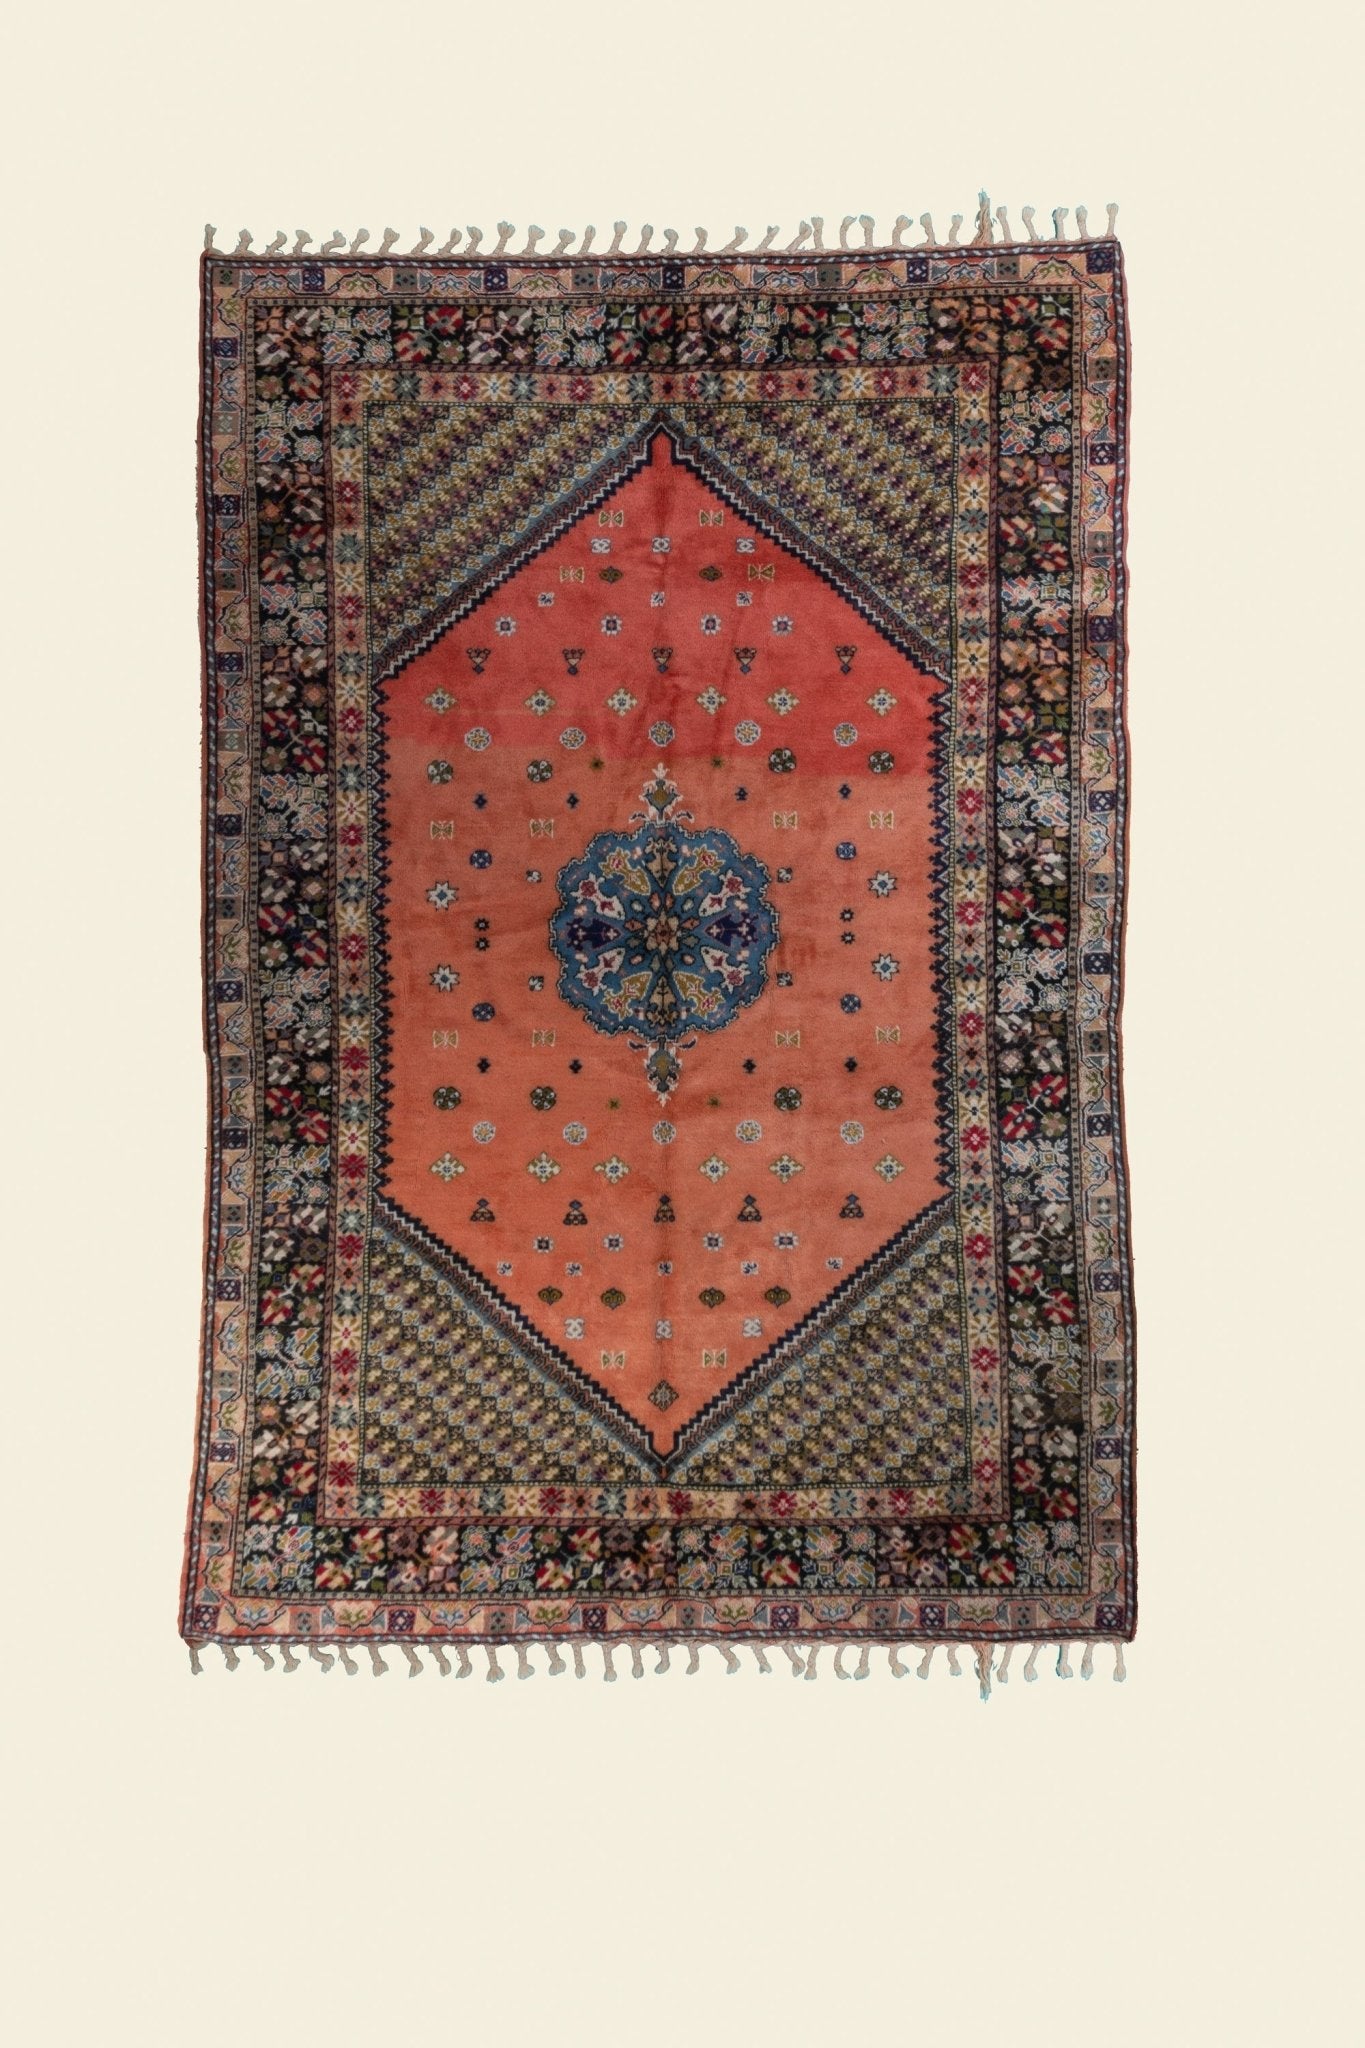 Vintage Rabat Moroccan Rug 6’33’’ x 9’61’’ - 193 cm x 293 cm (Wool) - Dar Bouchaib Marrakech